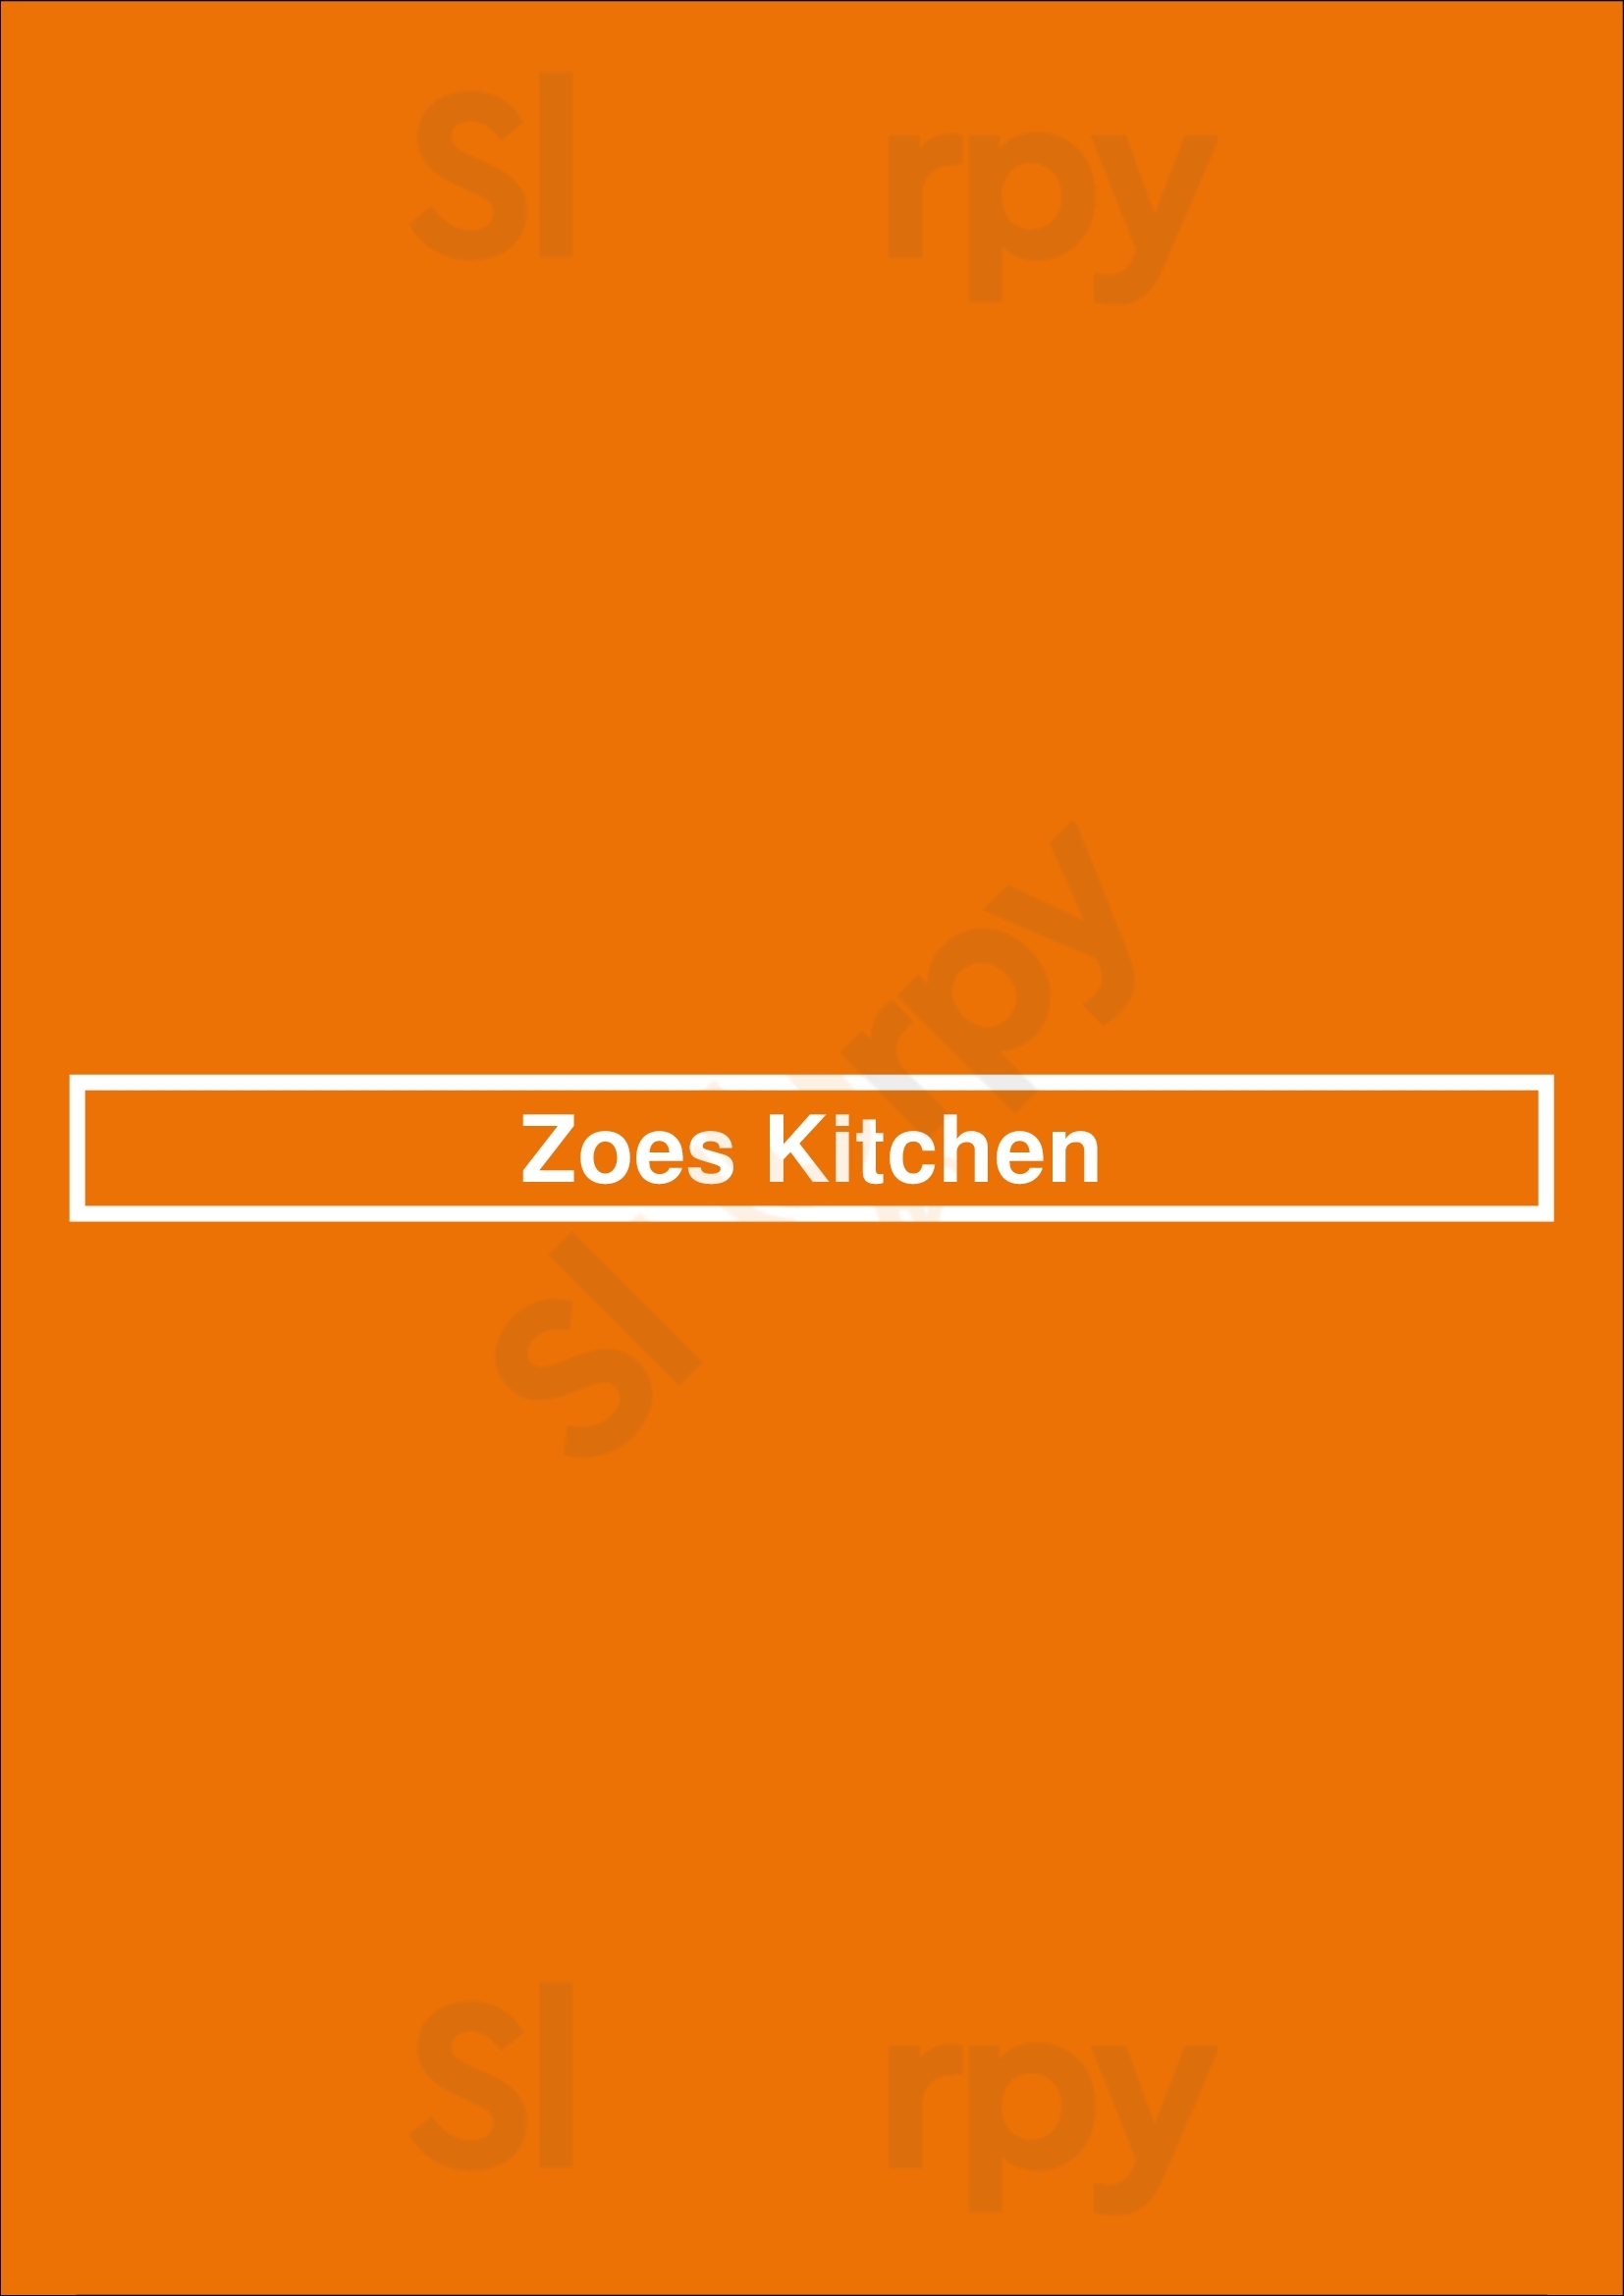 Zoes Kitchen Fayetteville Menu - 1